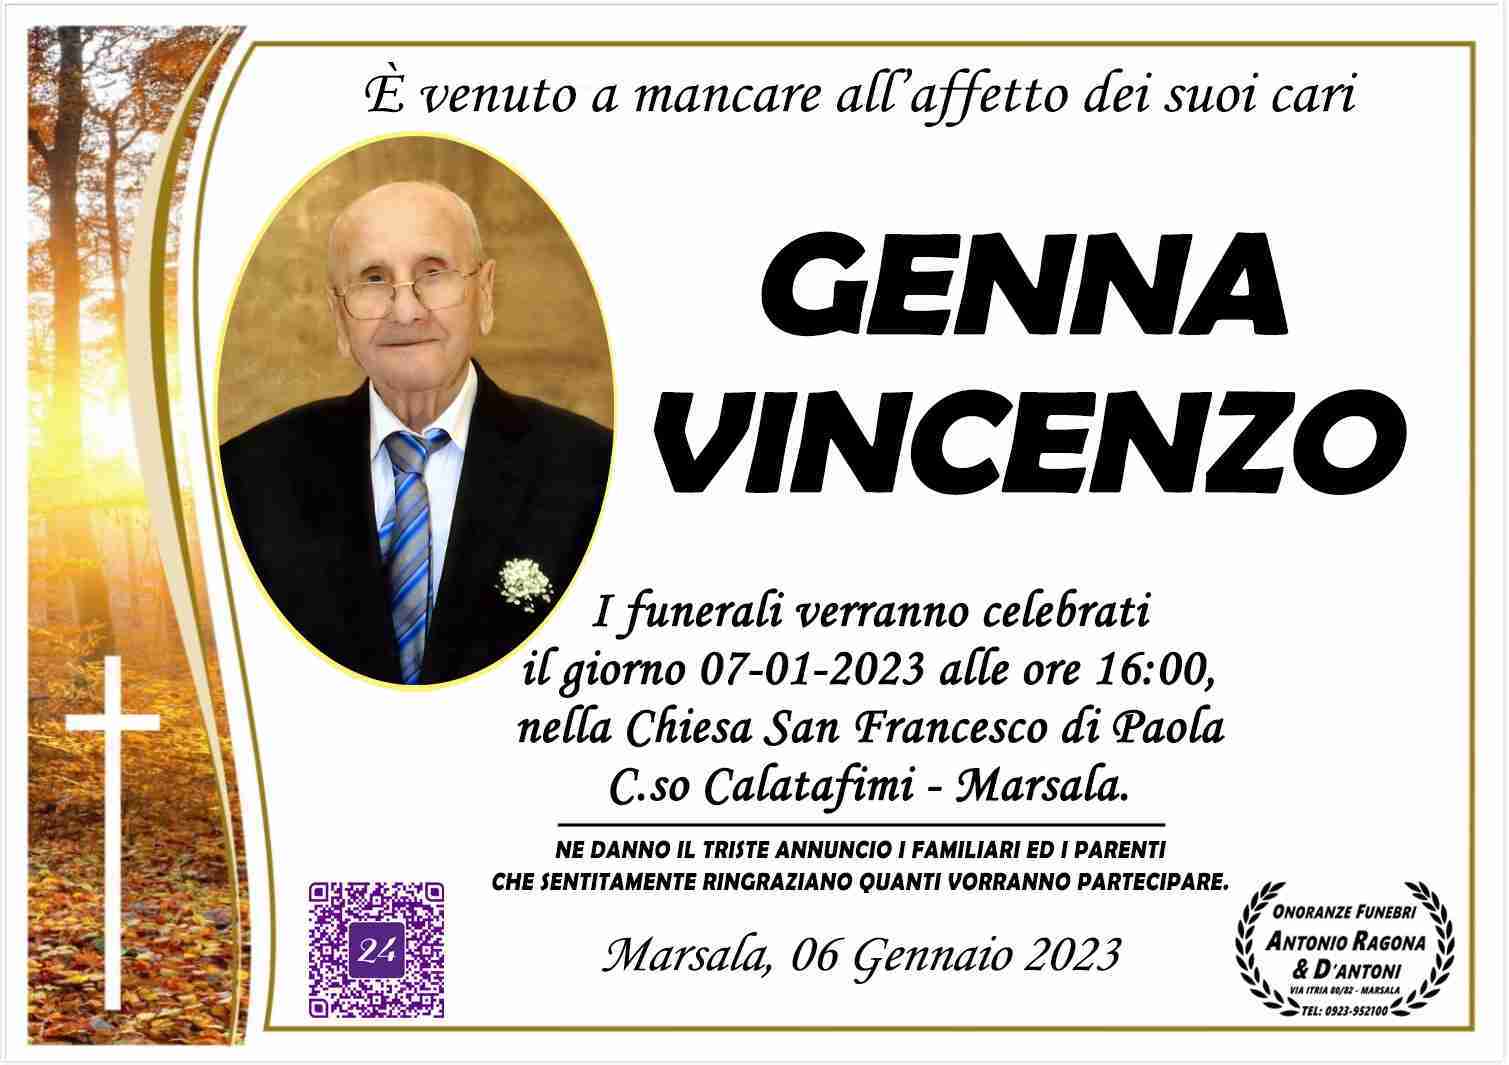 Vincenzo Genna